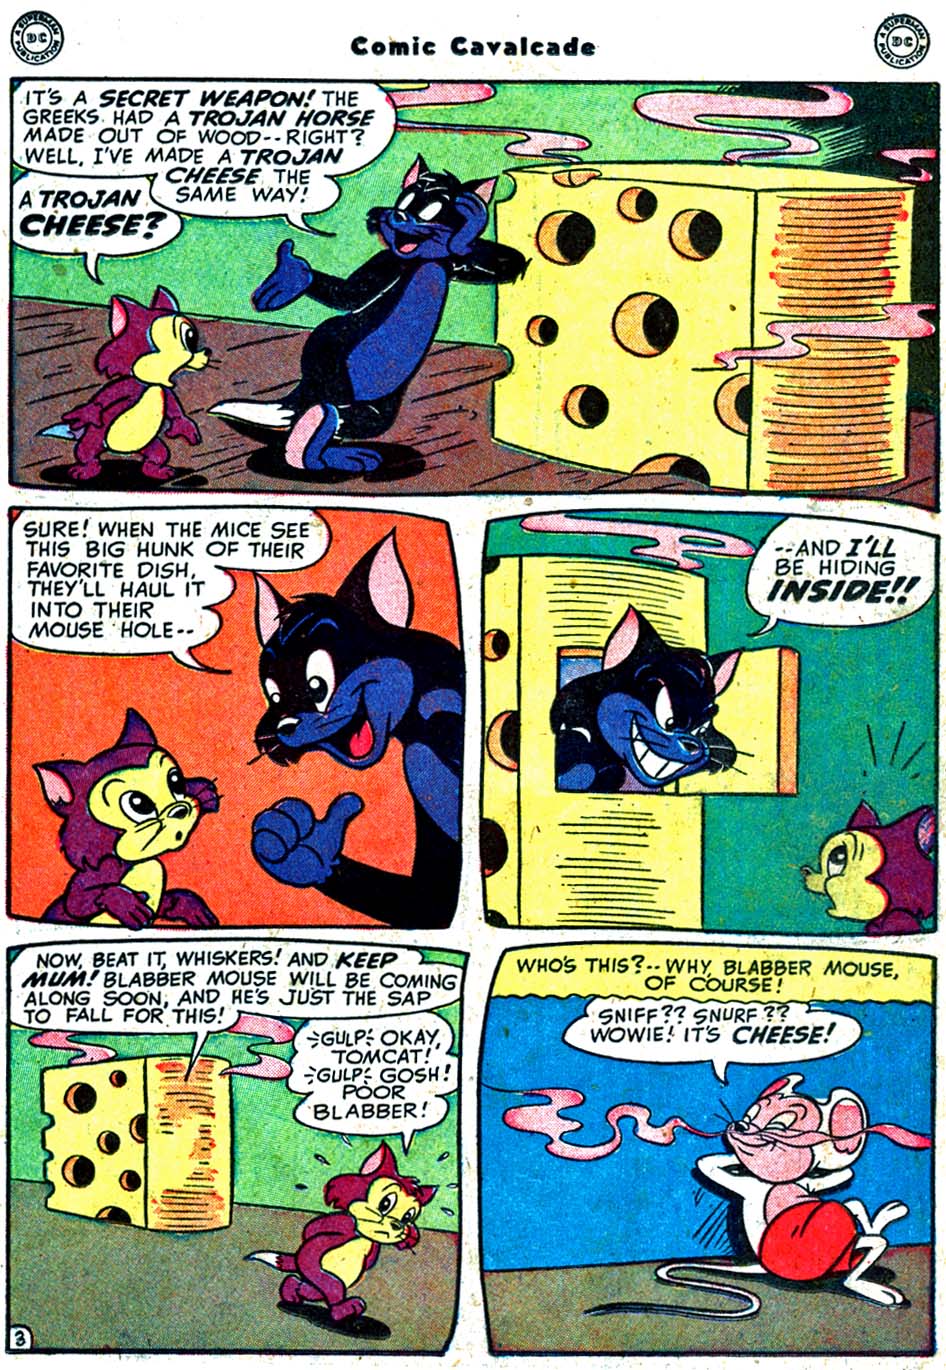 Comic Cavalcade issue 32 - Page 15